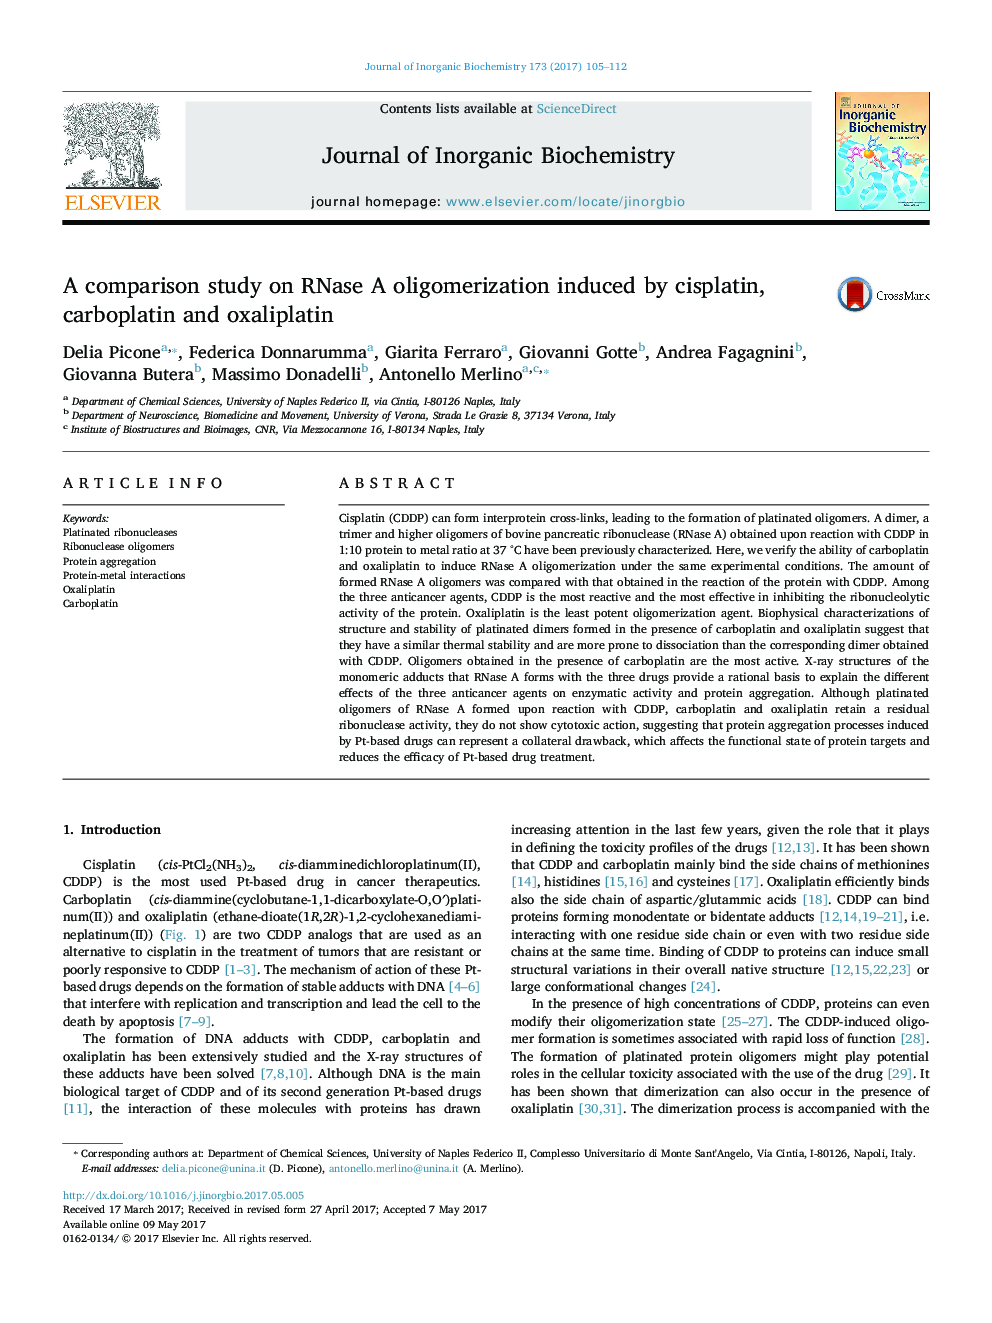 A comparison study on RNase A oligomerization induced by cisplatin, carboplatin and oxaliplatin